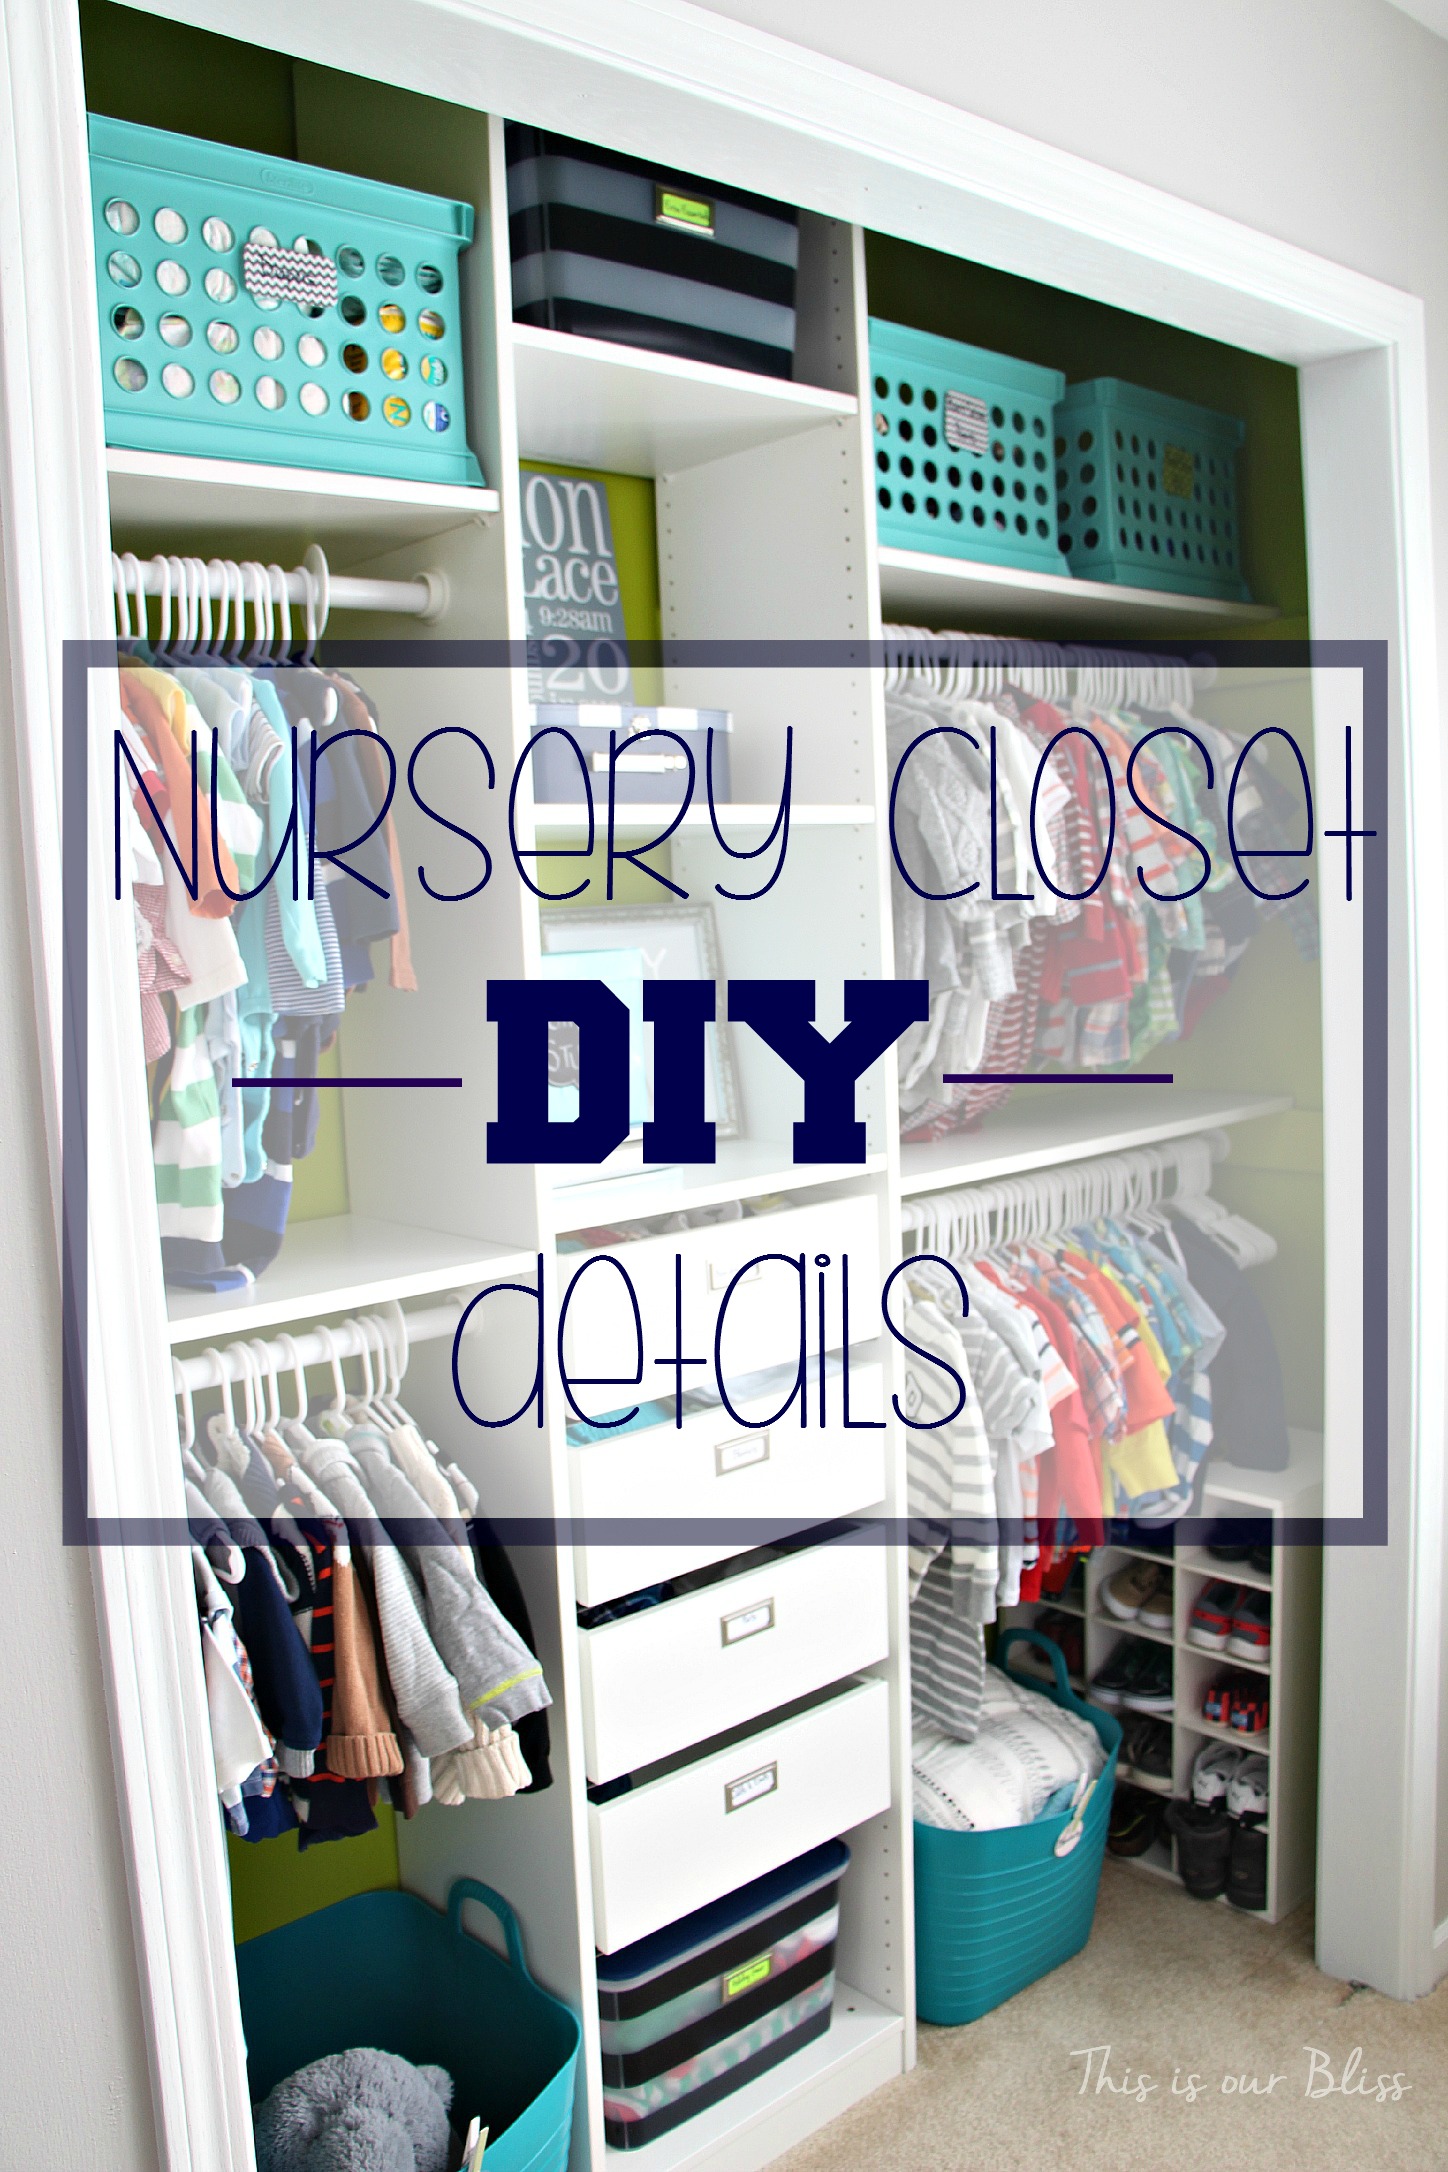 Baby Boy Nursery Closet DIY Details | How to DIY a Custom Nursery Closet | This is our Bliss | www.thisisourbliss.com